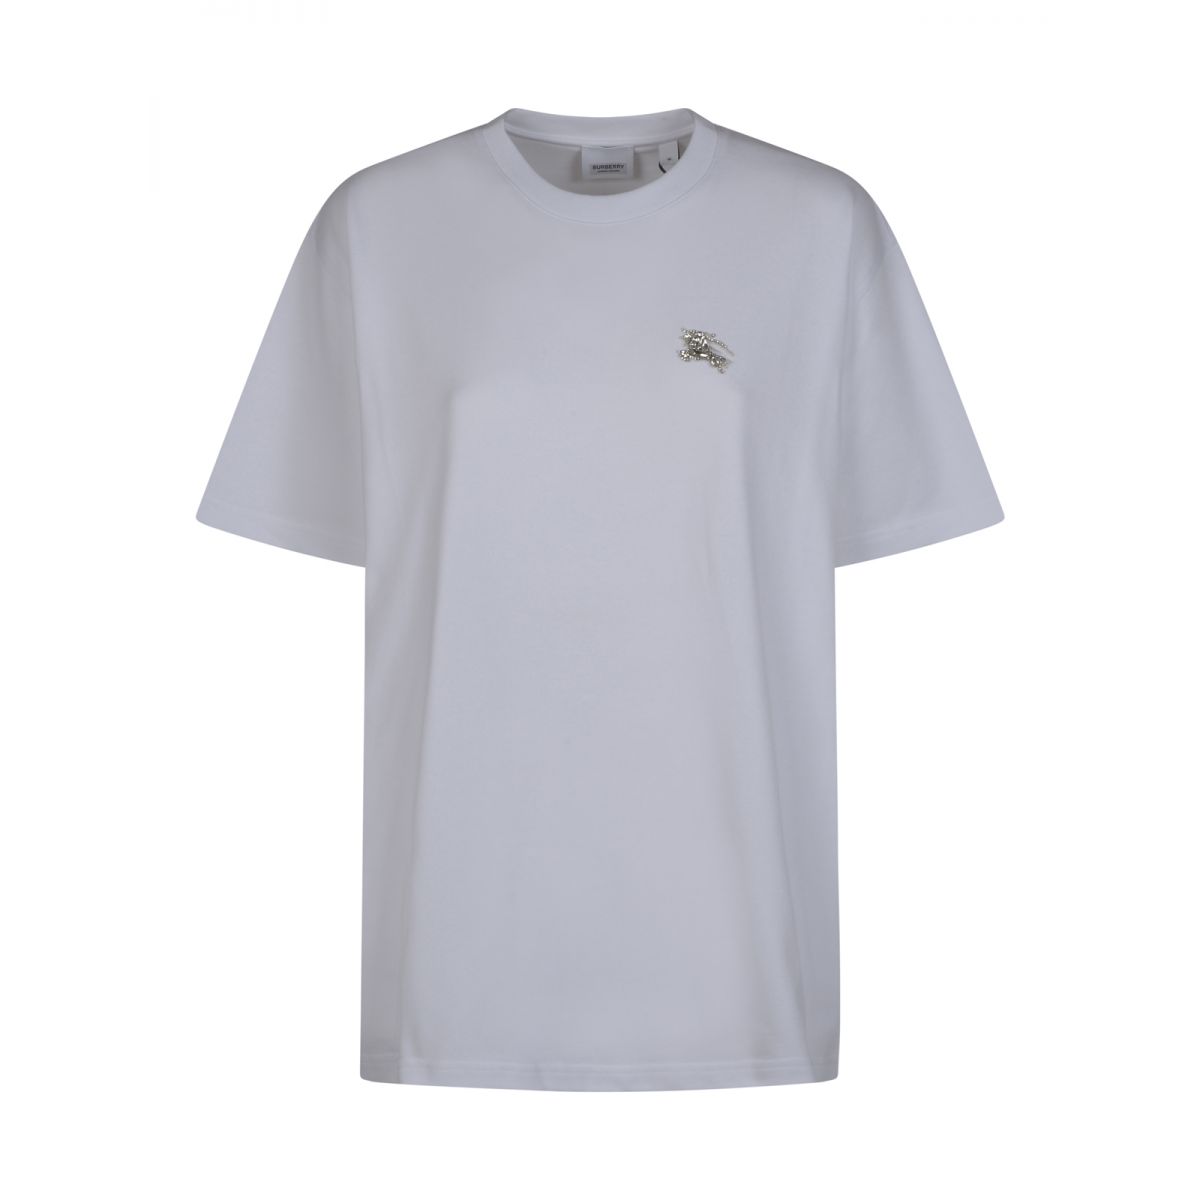 BURBERRY - Camiseta oversize de algodón con emblema Equestrian Knight de cristales